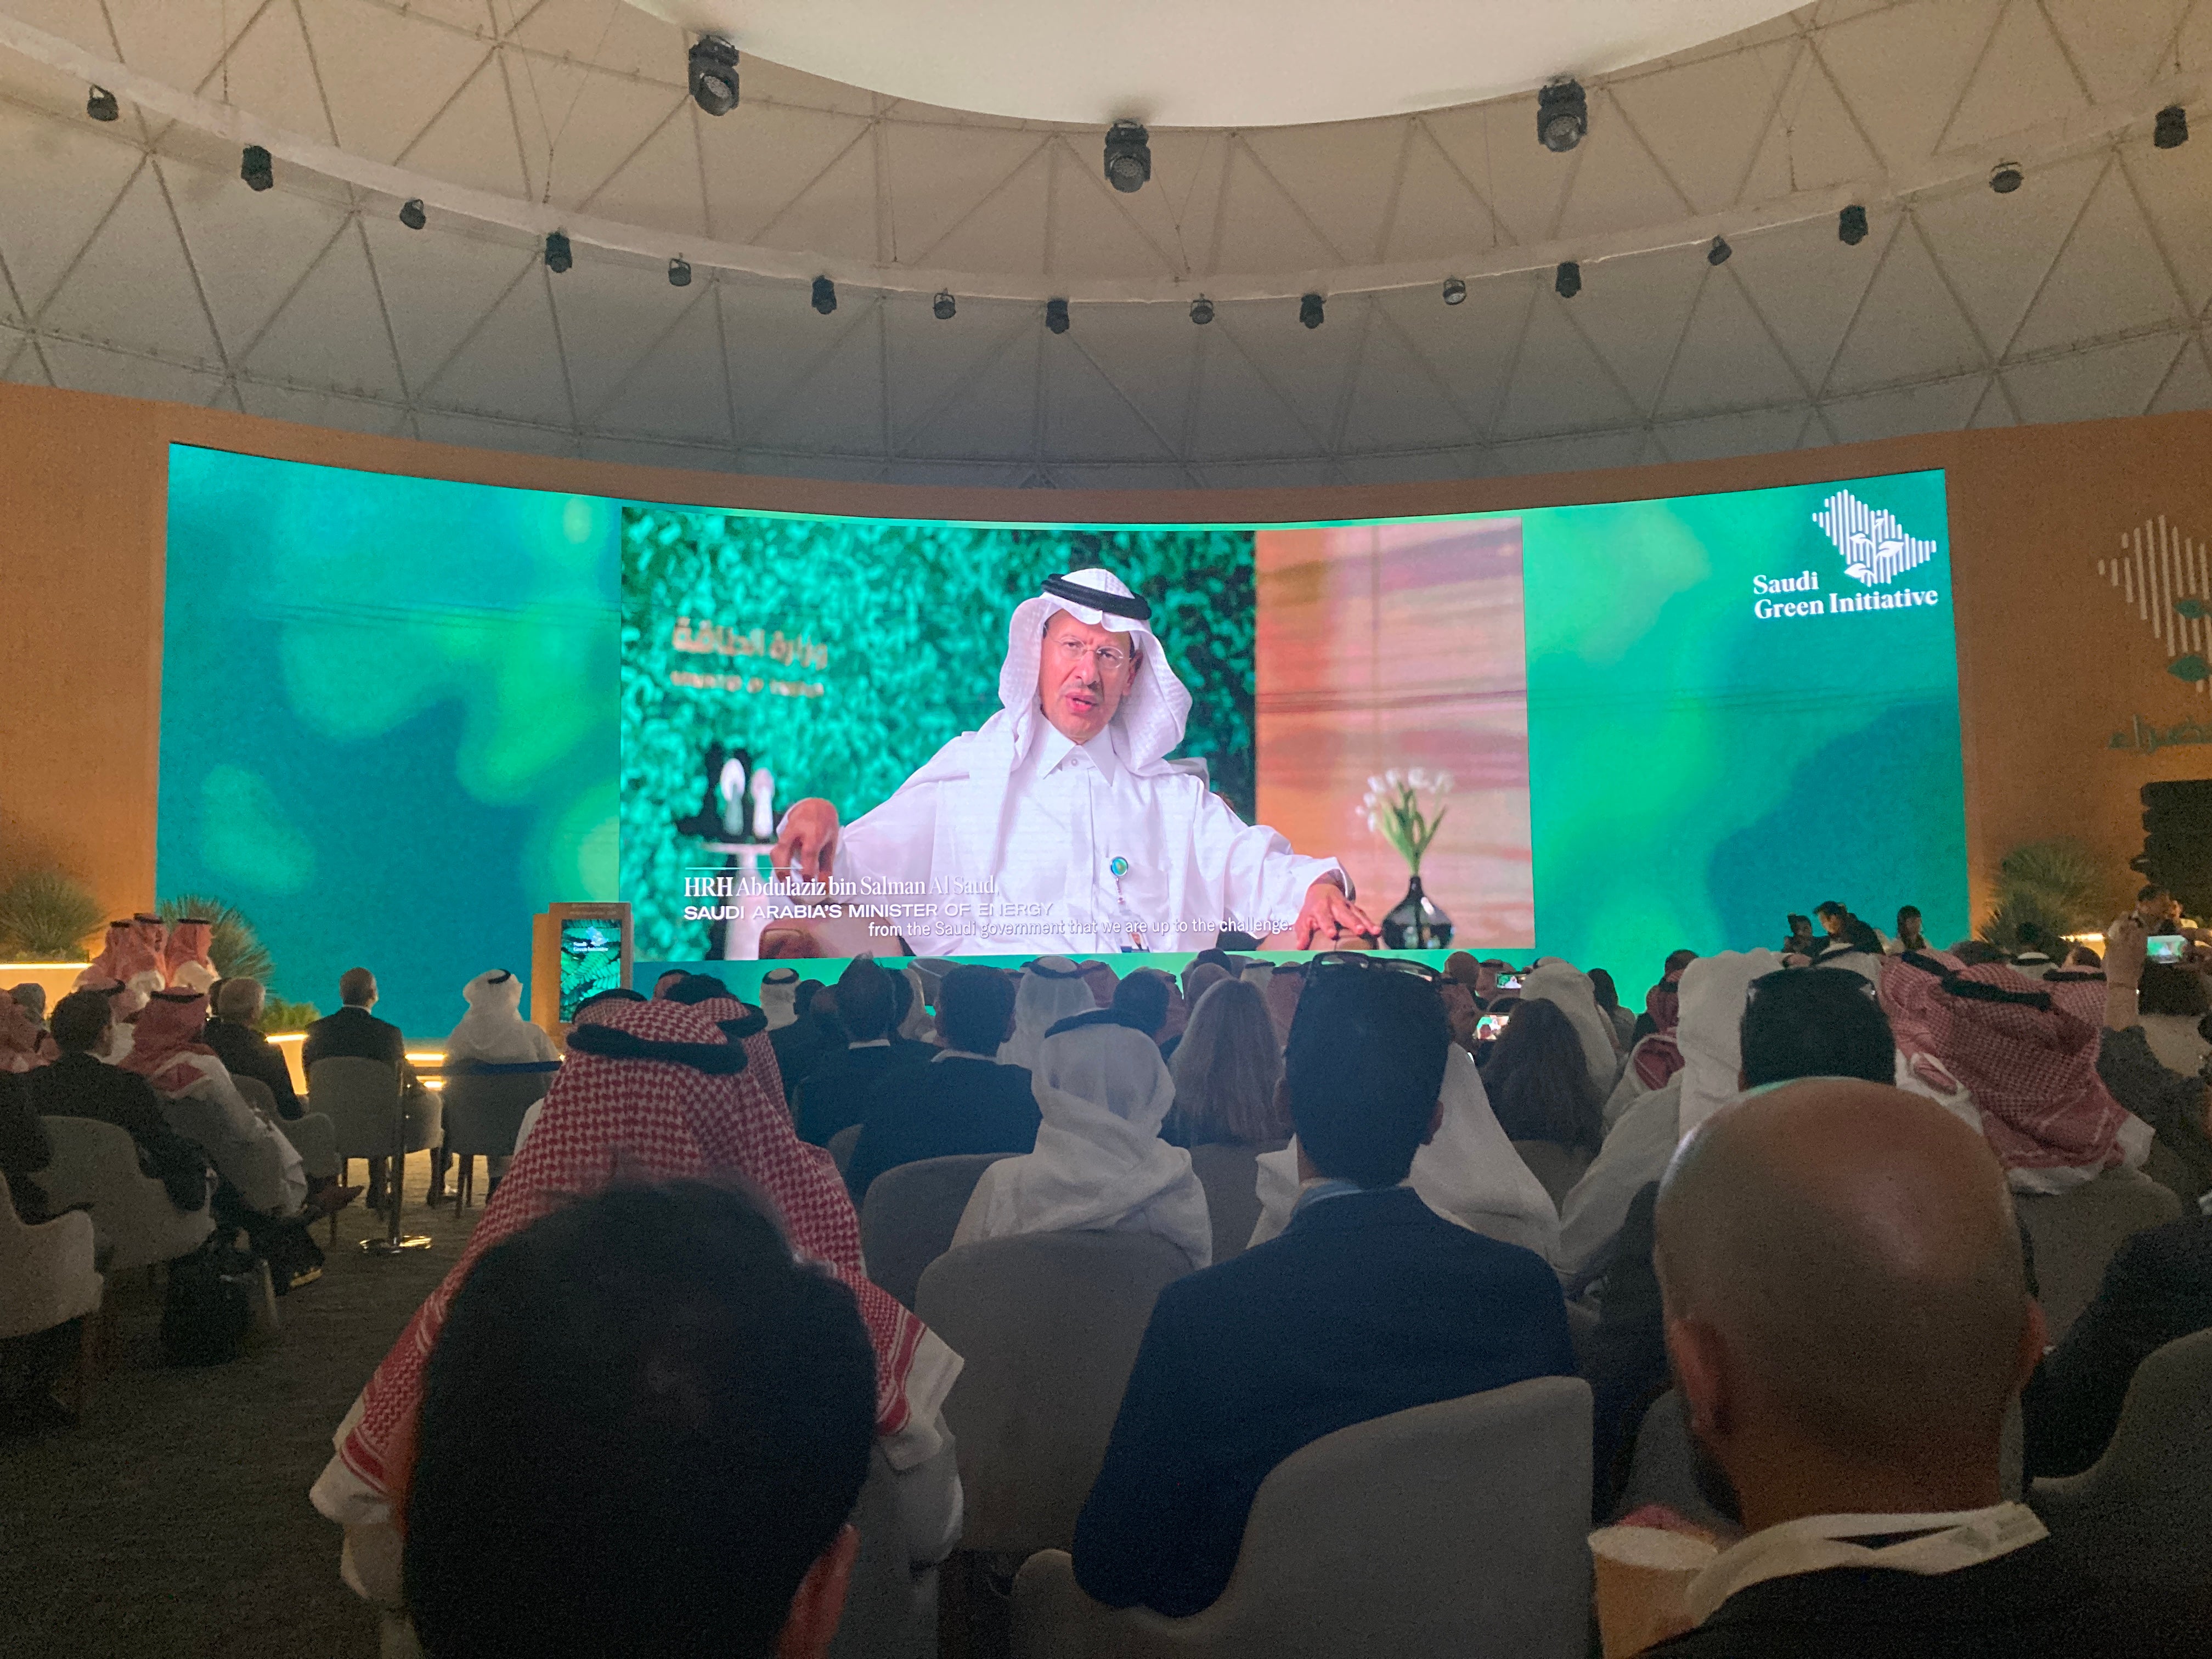 Prince Abdulaziz bin Salman al Saud, Saudi Arabia’s energy minister, on stage during the Saudi Green Initiative forum